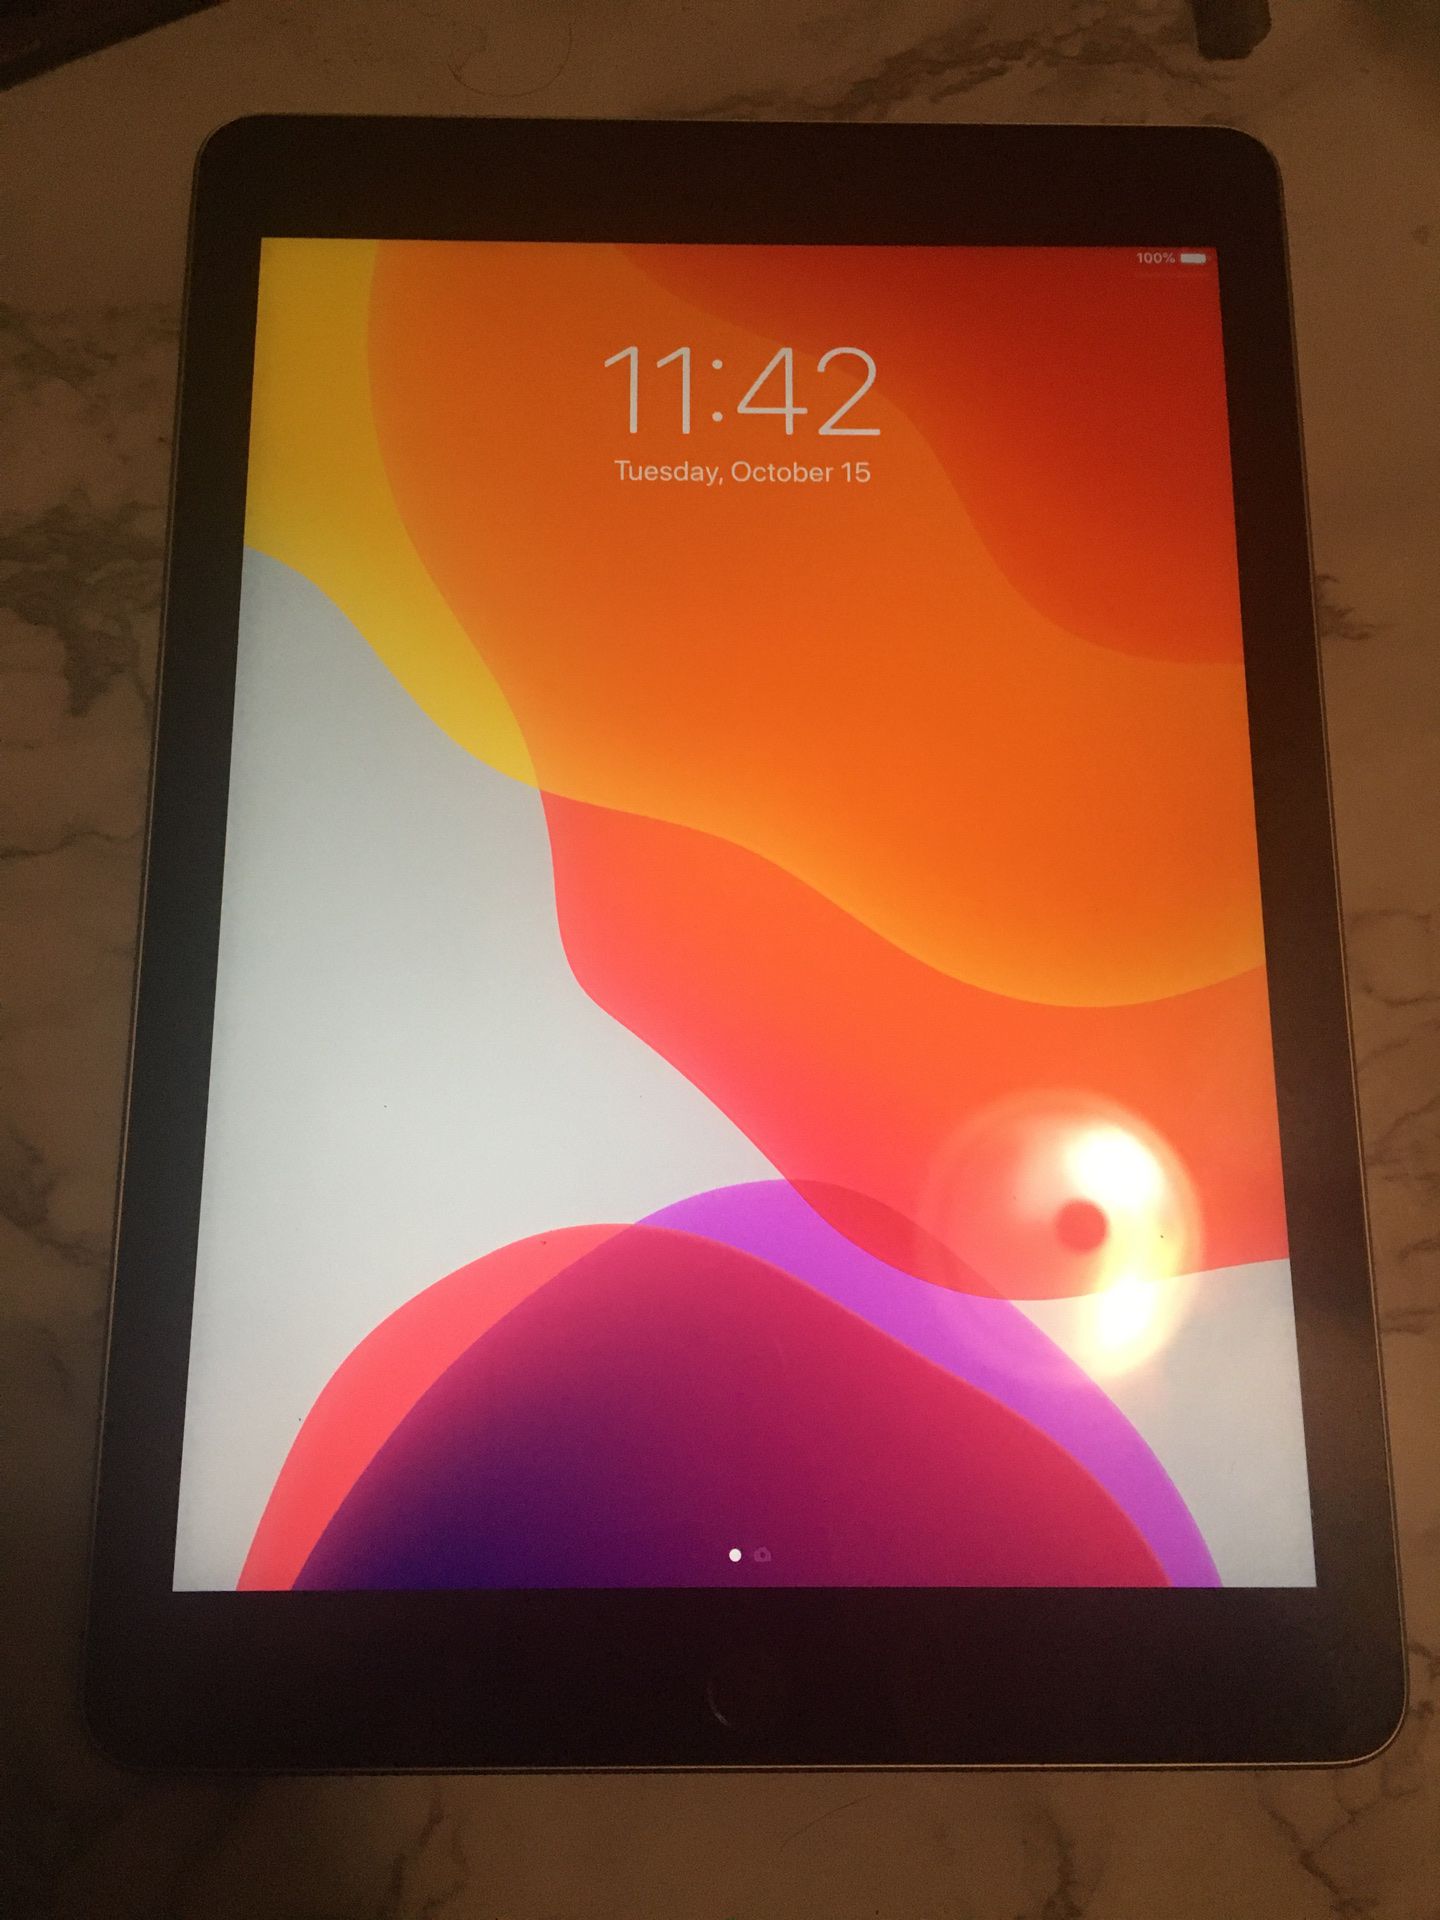 iPad 6th generation unlocked